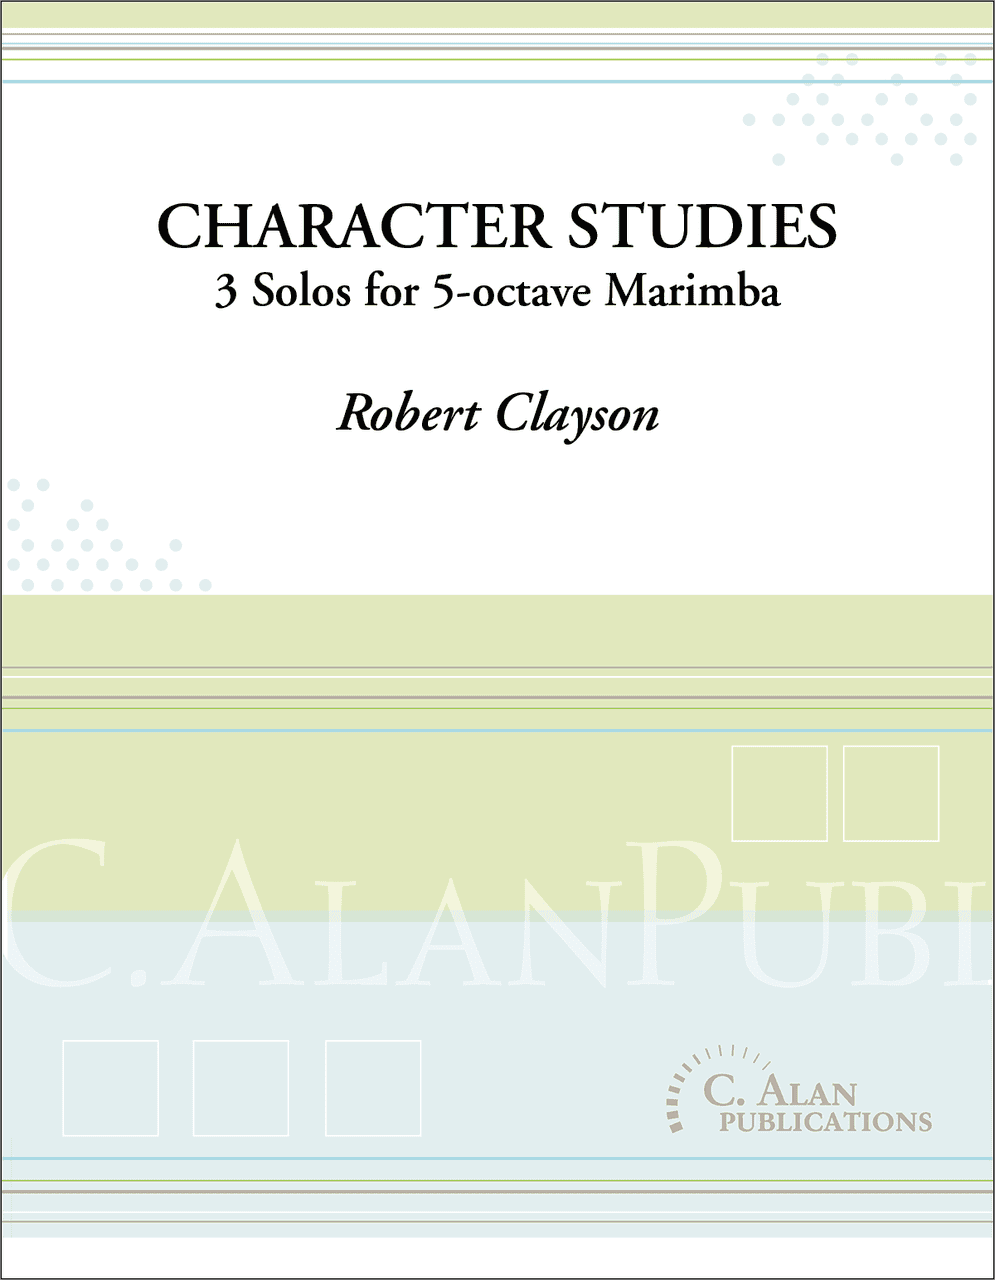 Character Studies by Robert Clyson